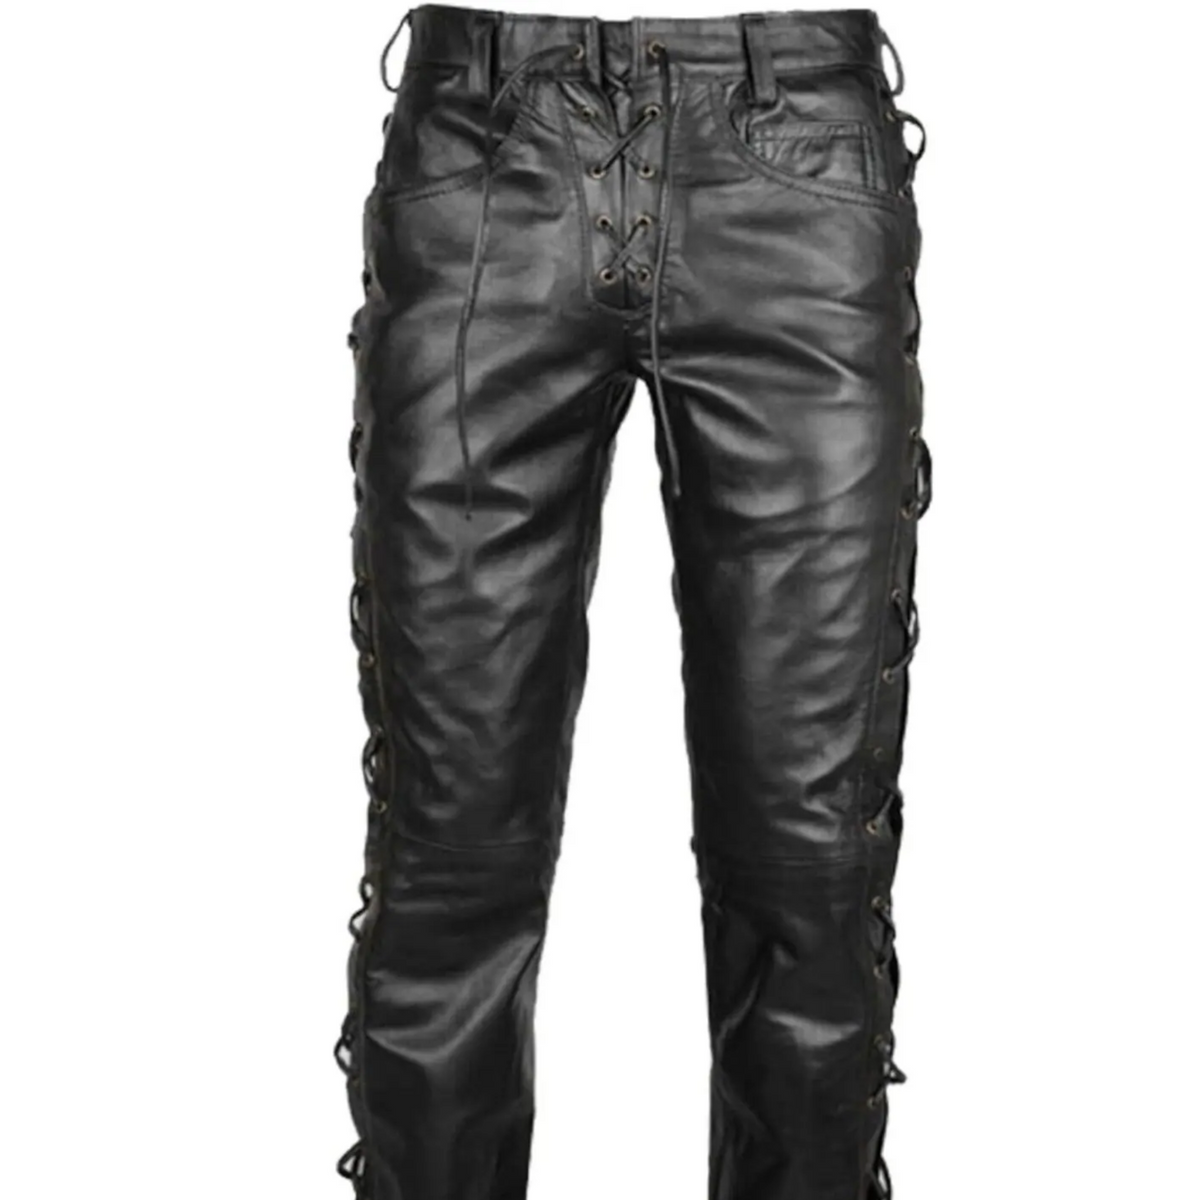 Mens Designer Black Leather Motorcycle Biker Pants Trousers